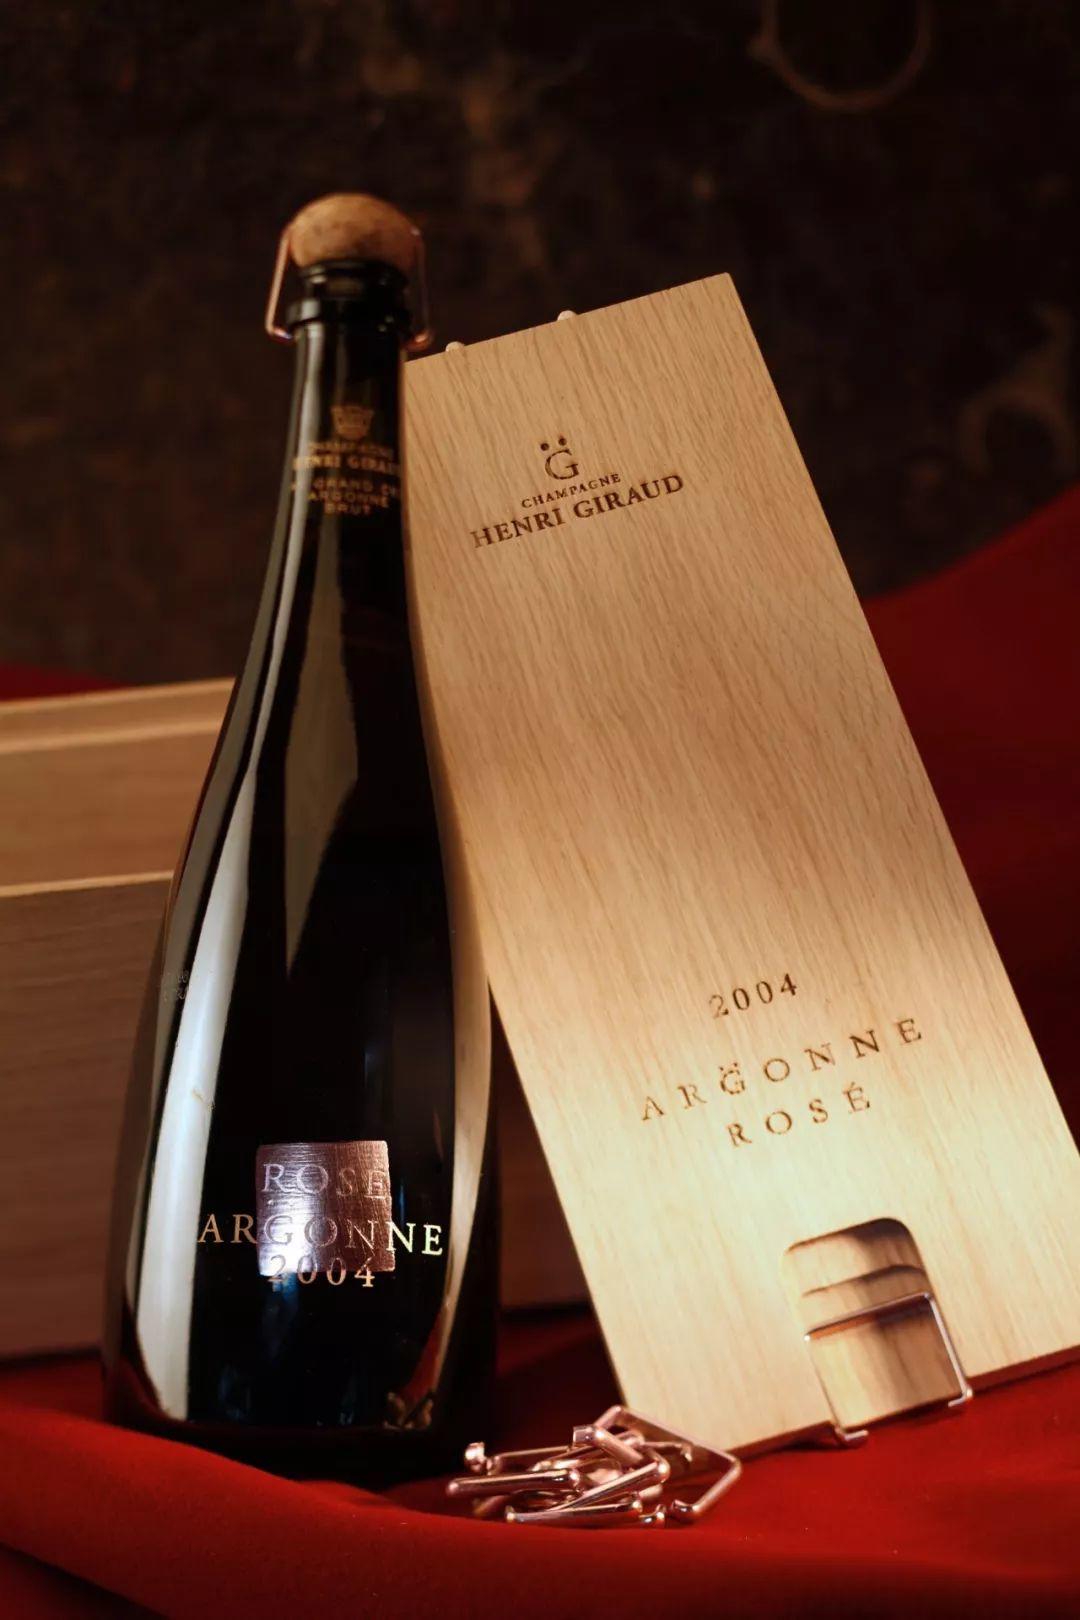 2019 展商介绍 | 亨利吉罗香槟 Champagne Henri Giraud